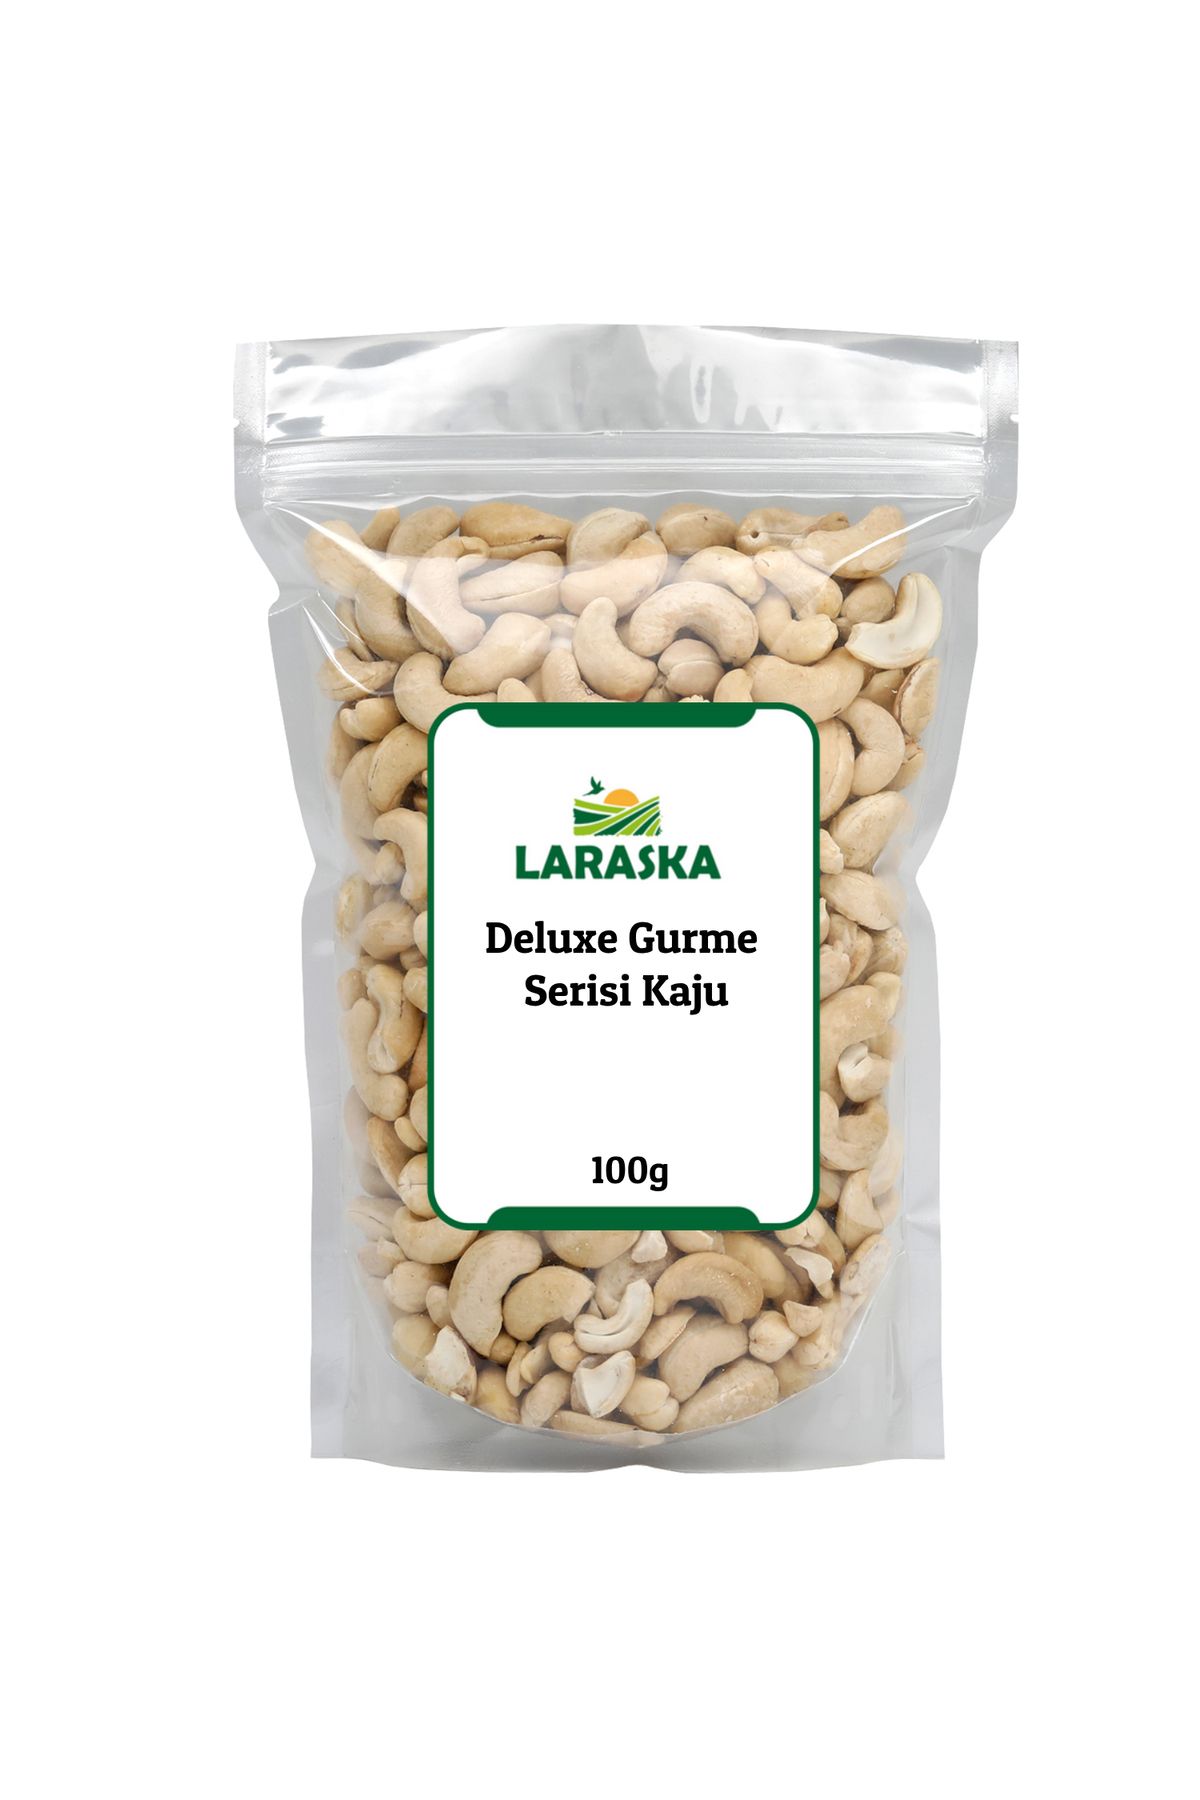 Laraska Deluxe Gurme Serisi Kaju -çiğ- Whole Cashew Nuts